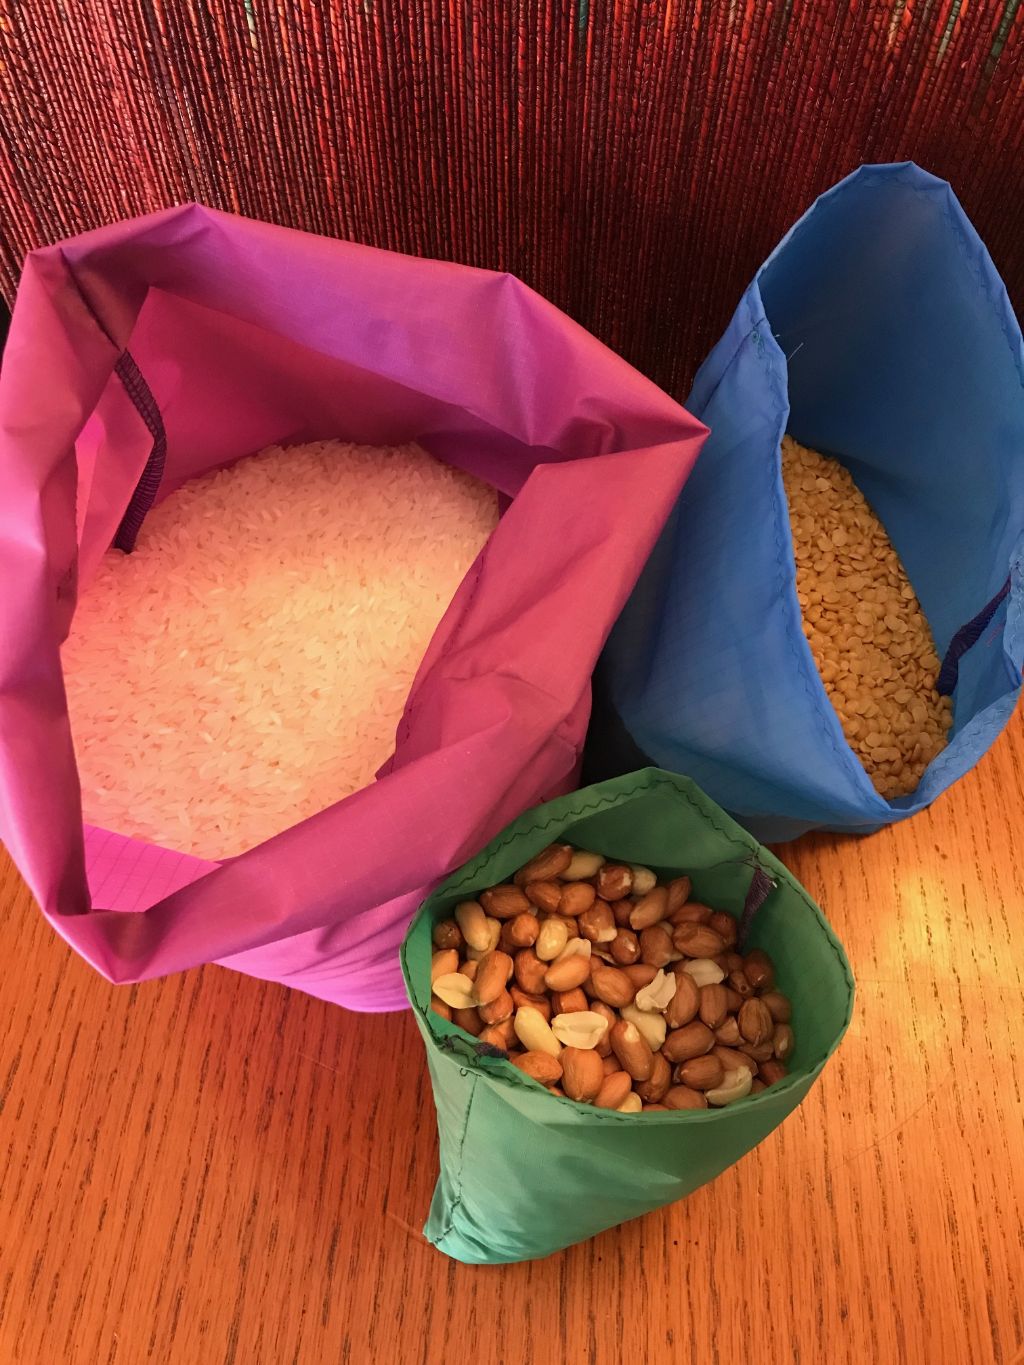 Bulk Bin Bags Flour Grain Bags - 6 pack